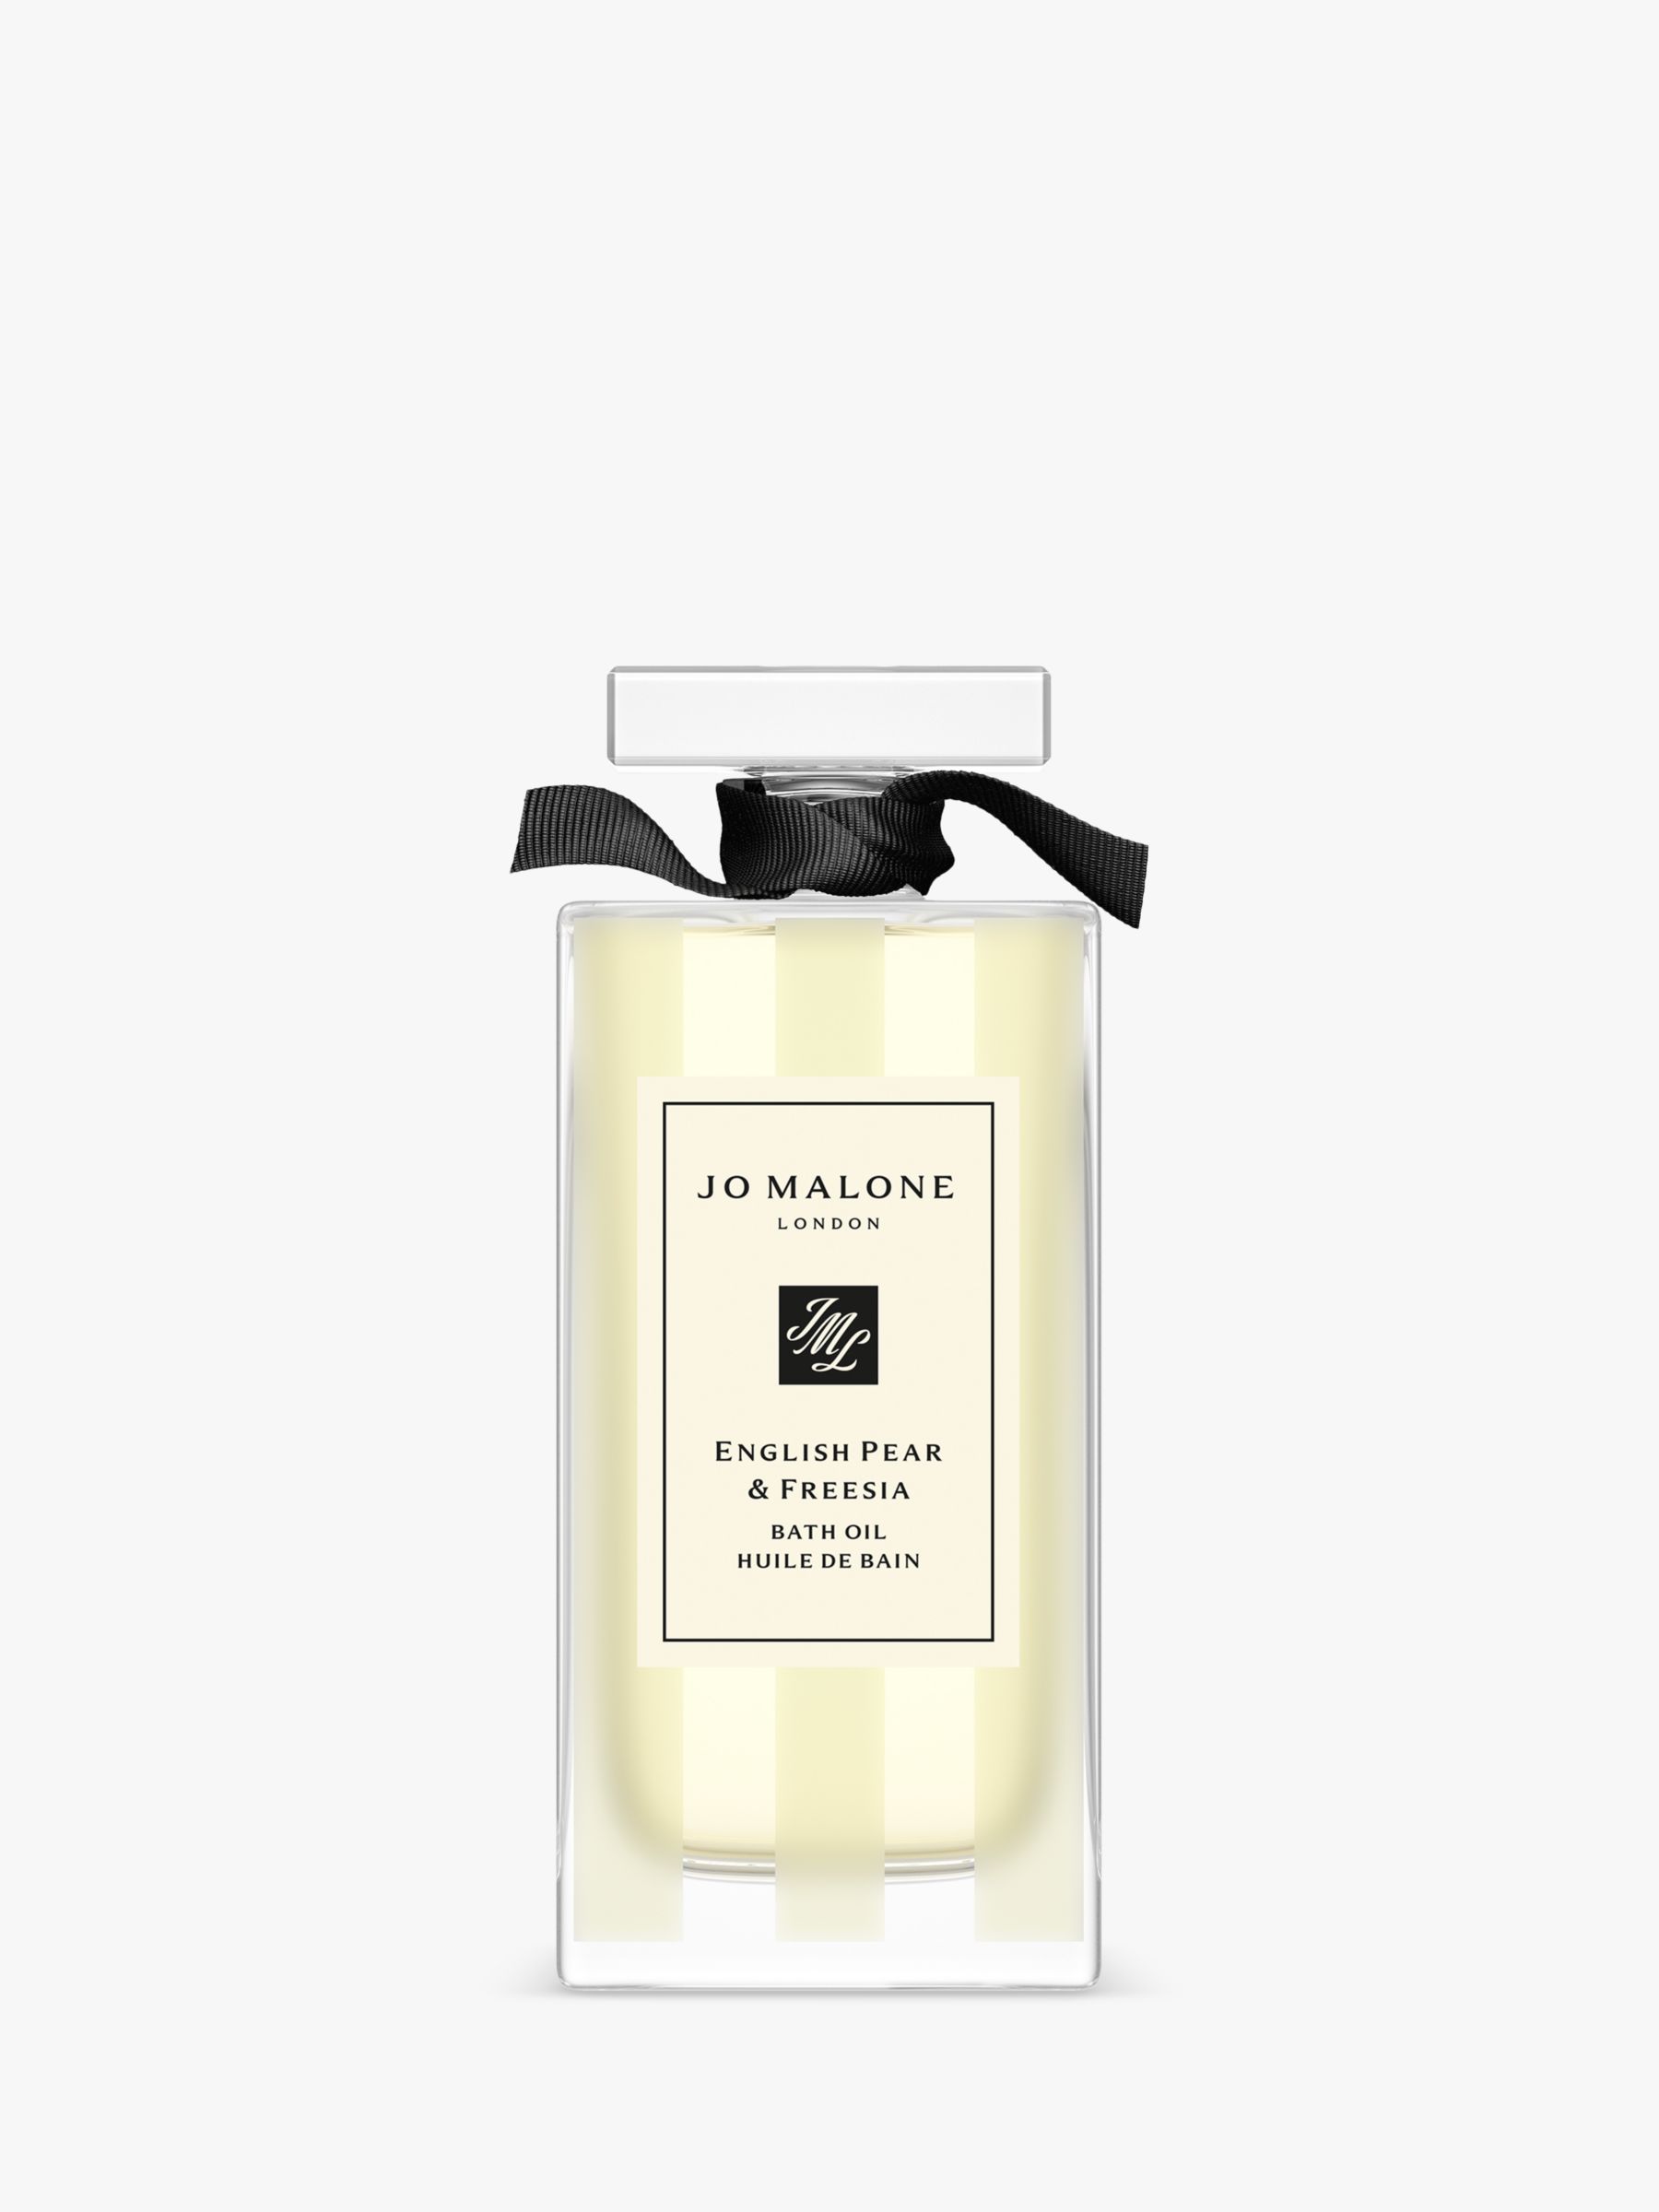 Jo Malone London English Pear & Freesia Bath Oil, 30ml